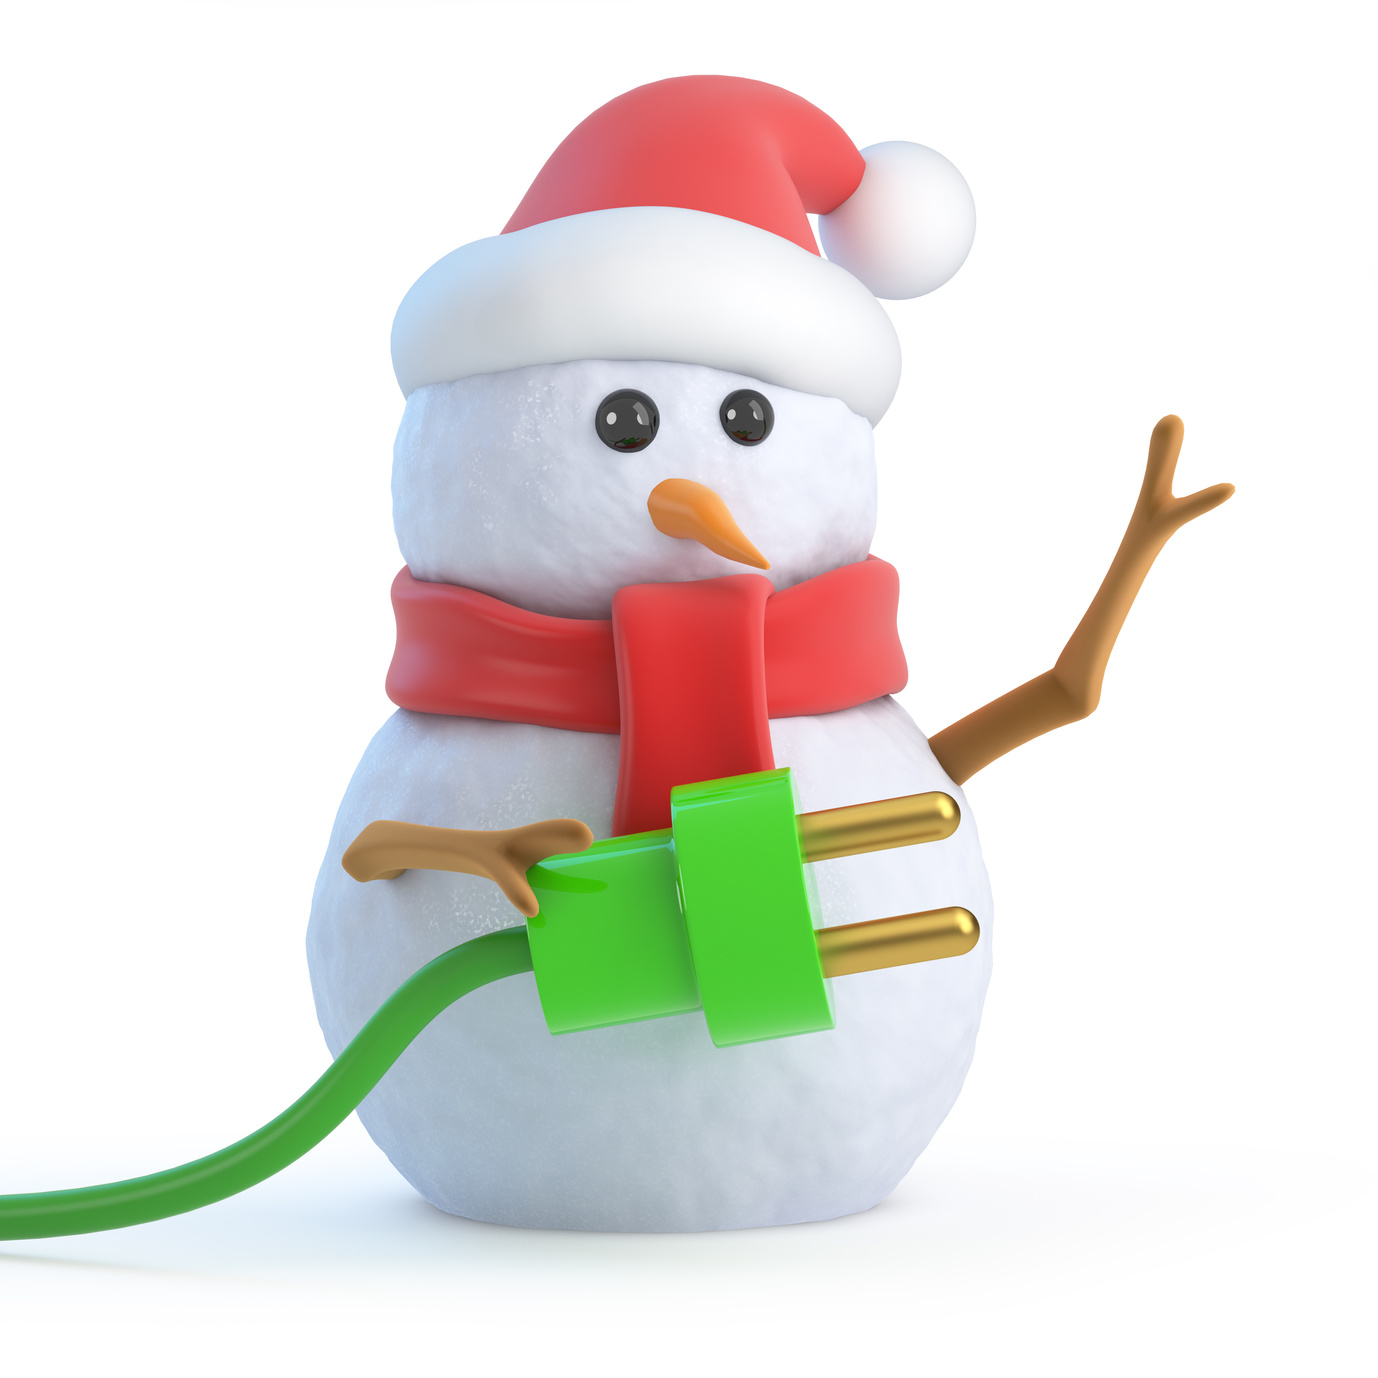 Santa snowman plugs into green energy